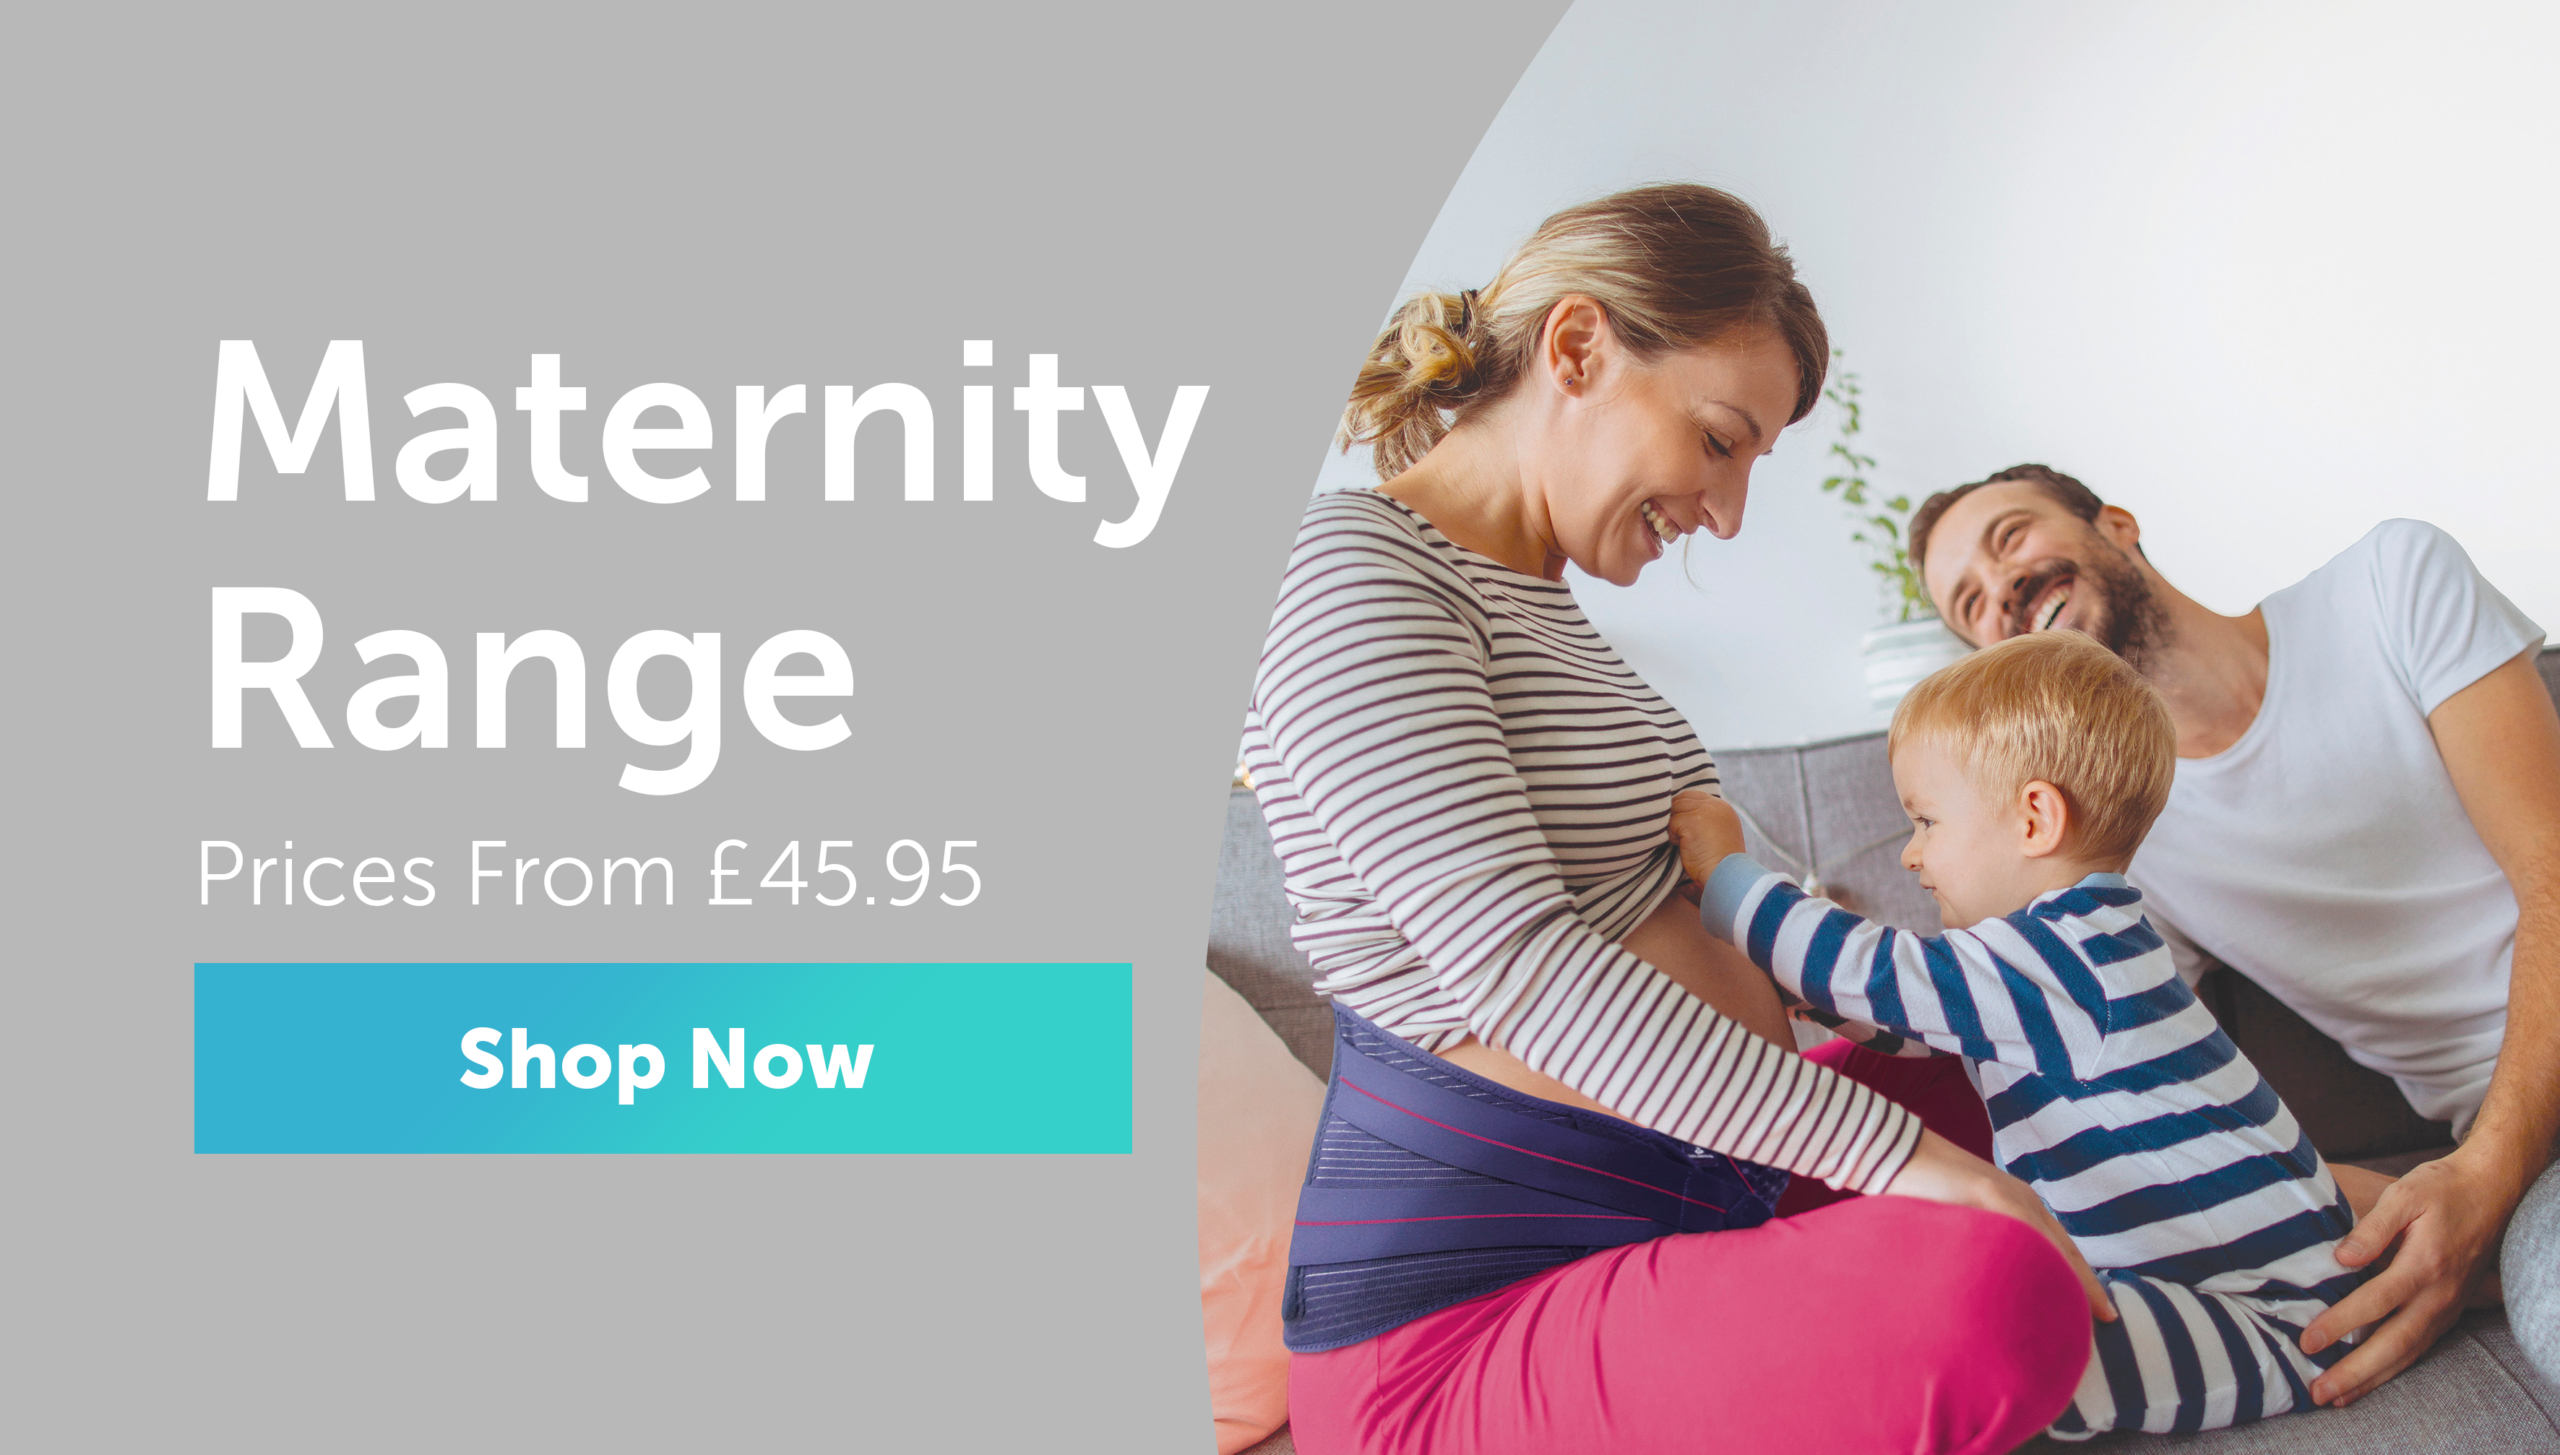 Maternity Range From £45.95